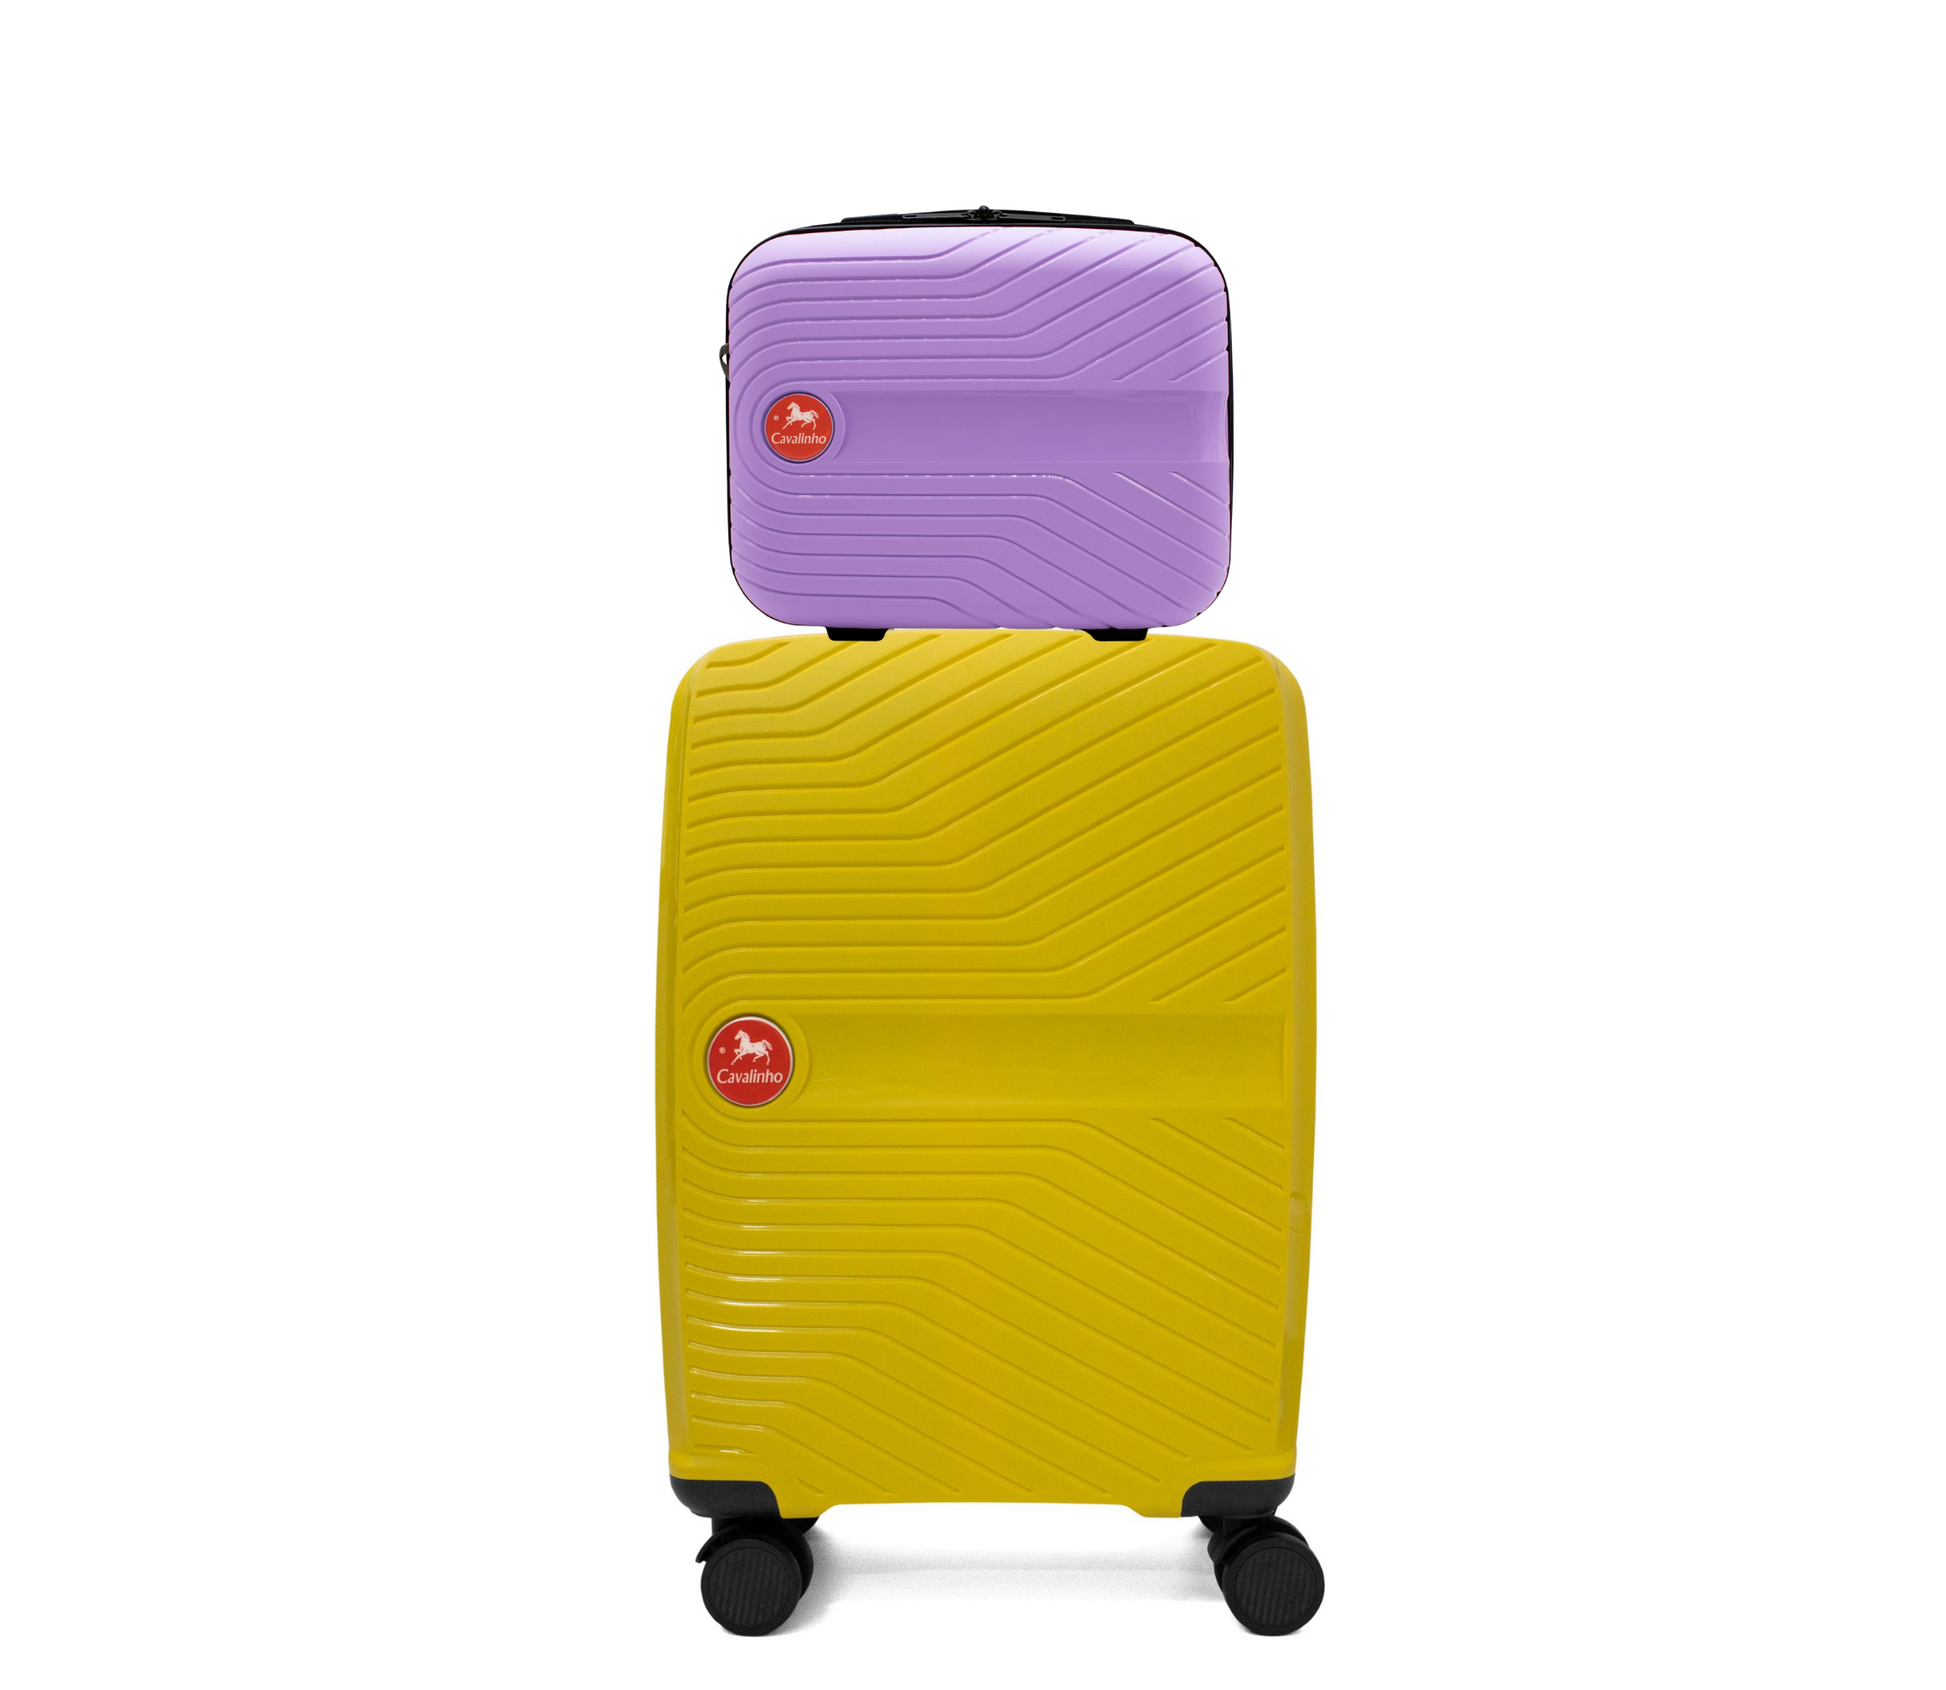 Cavalinho Colorful 2 Piece Luggage Set (15" & 19") - Lilac Yellow - 68020004.3908.S1519._1